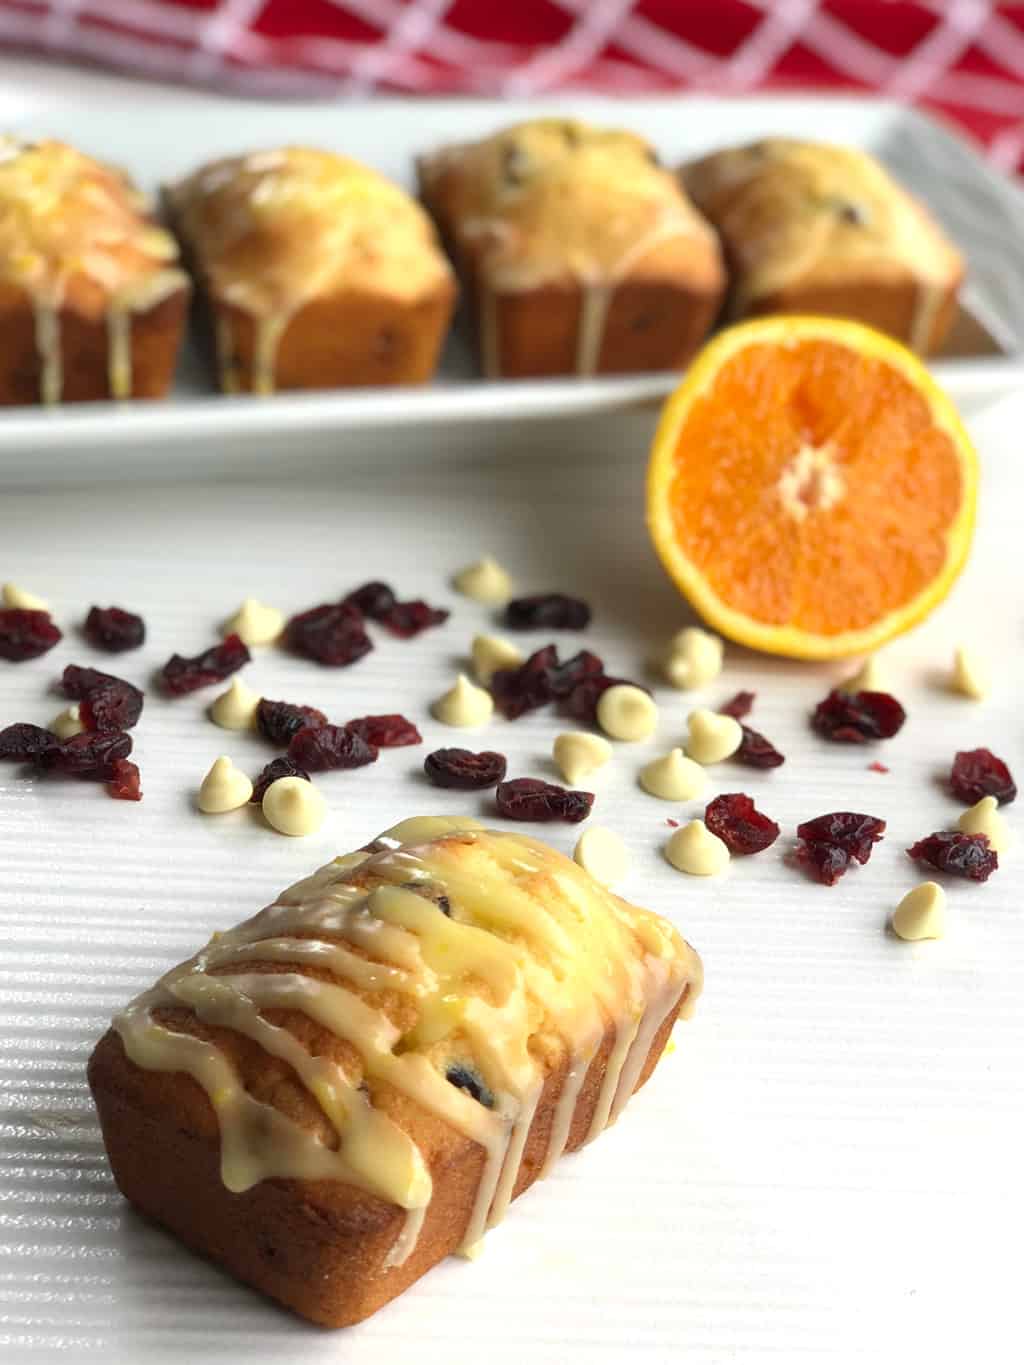 Sliced White Chocolate & Cranberry Loaf with orange citrus glaze